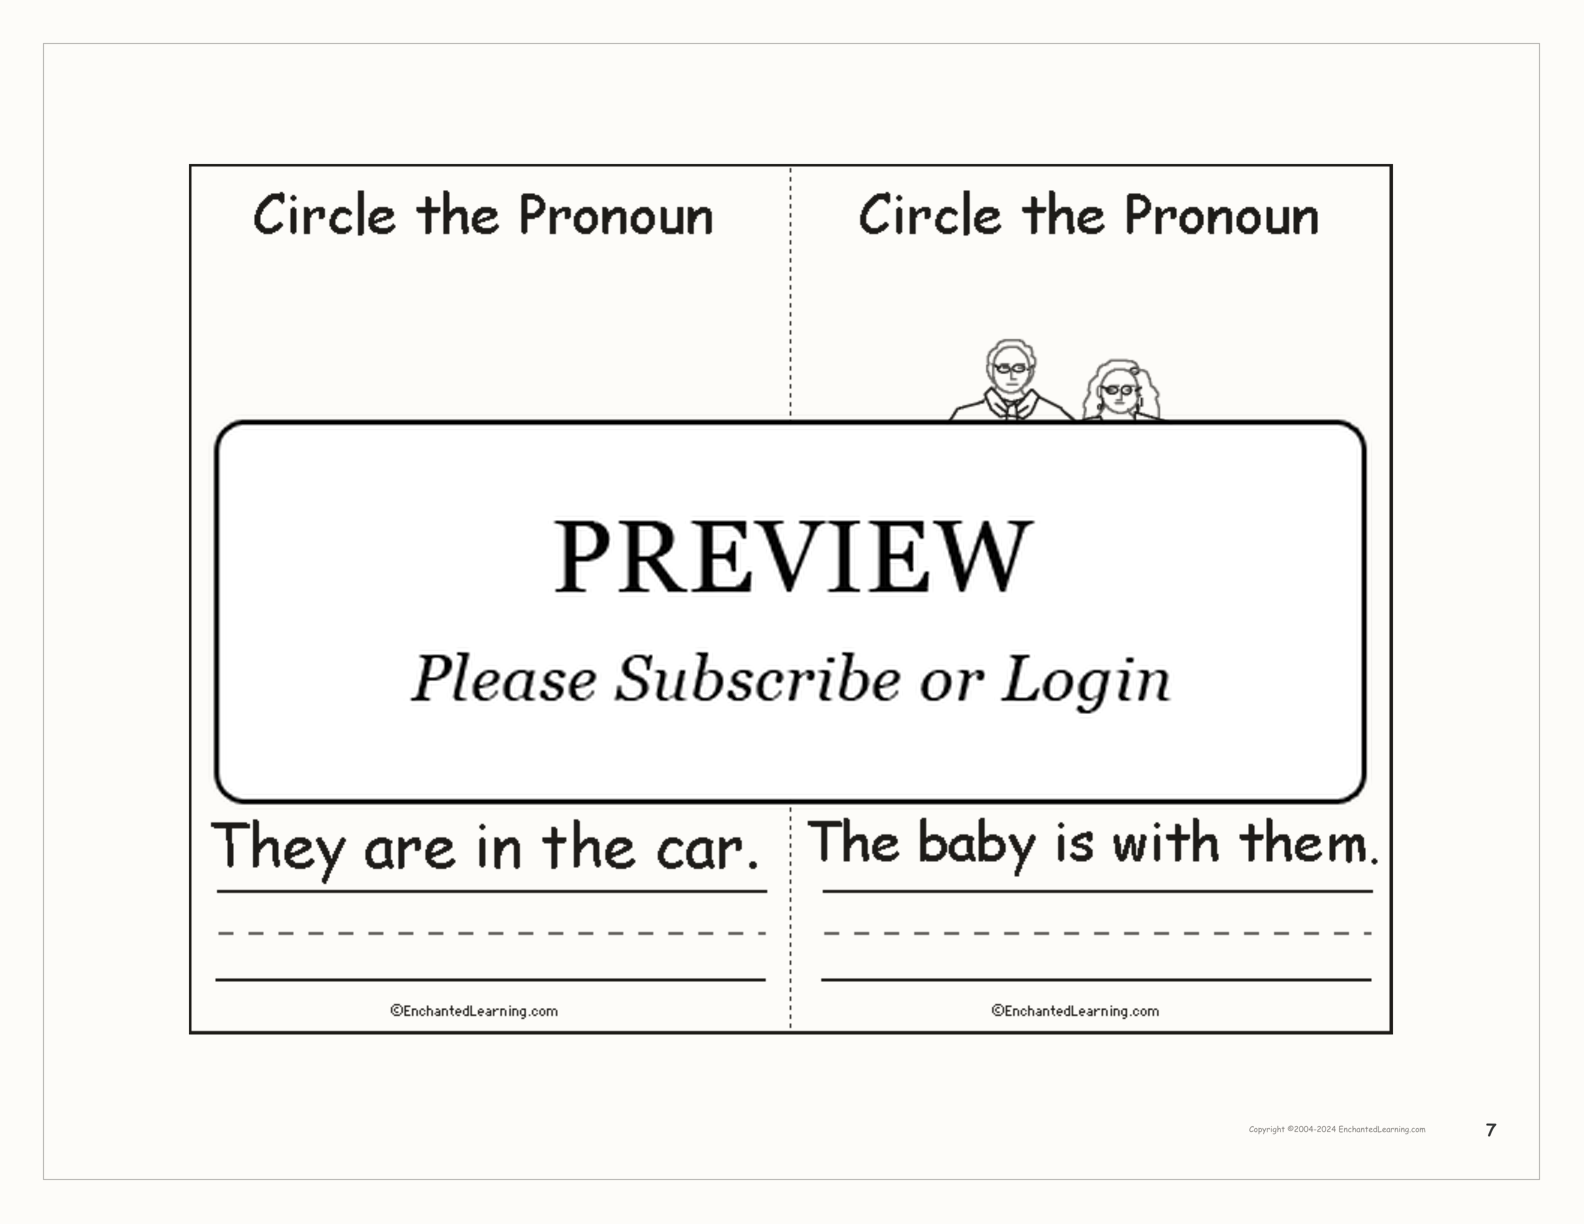 Circle the Pronouns Book interactive printout page 7